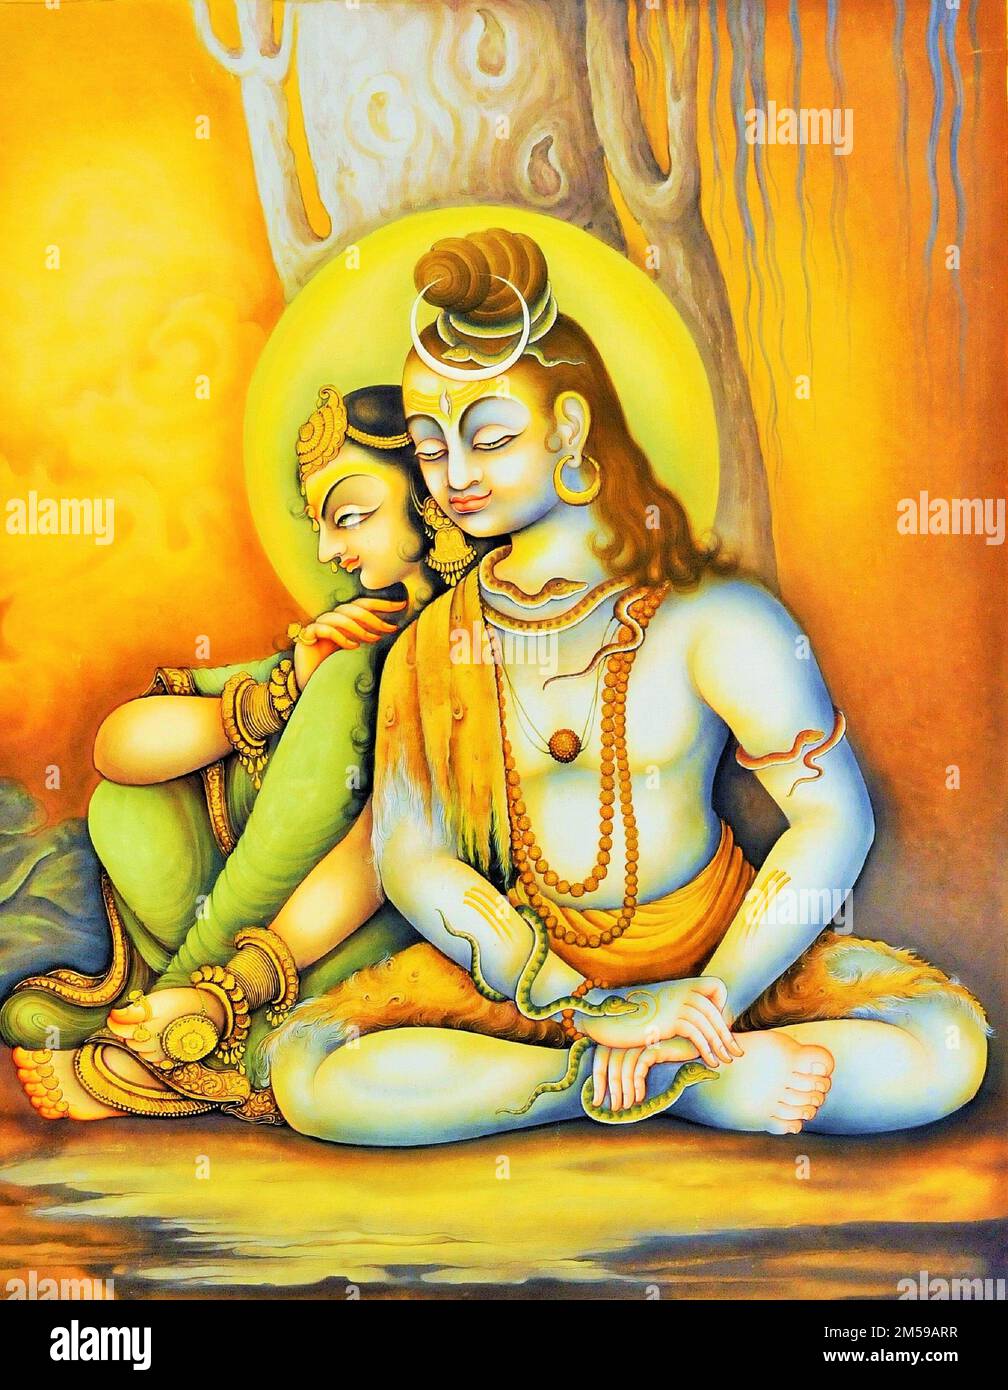 Lord Shiva Parvati artwork painting Stock Photo